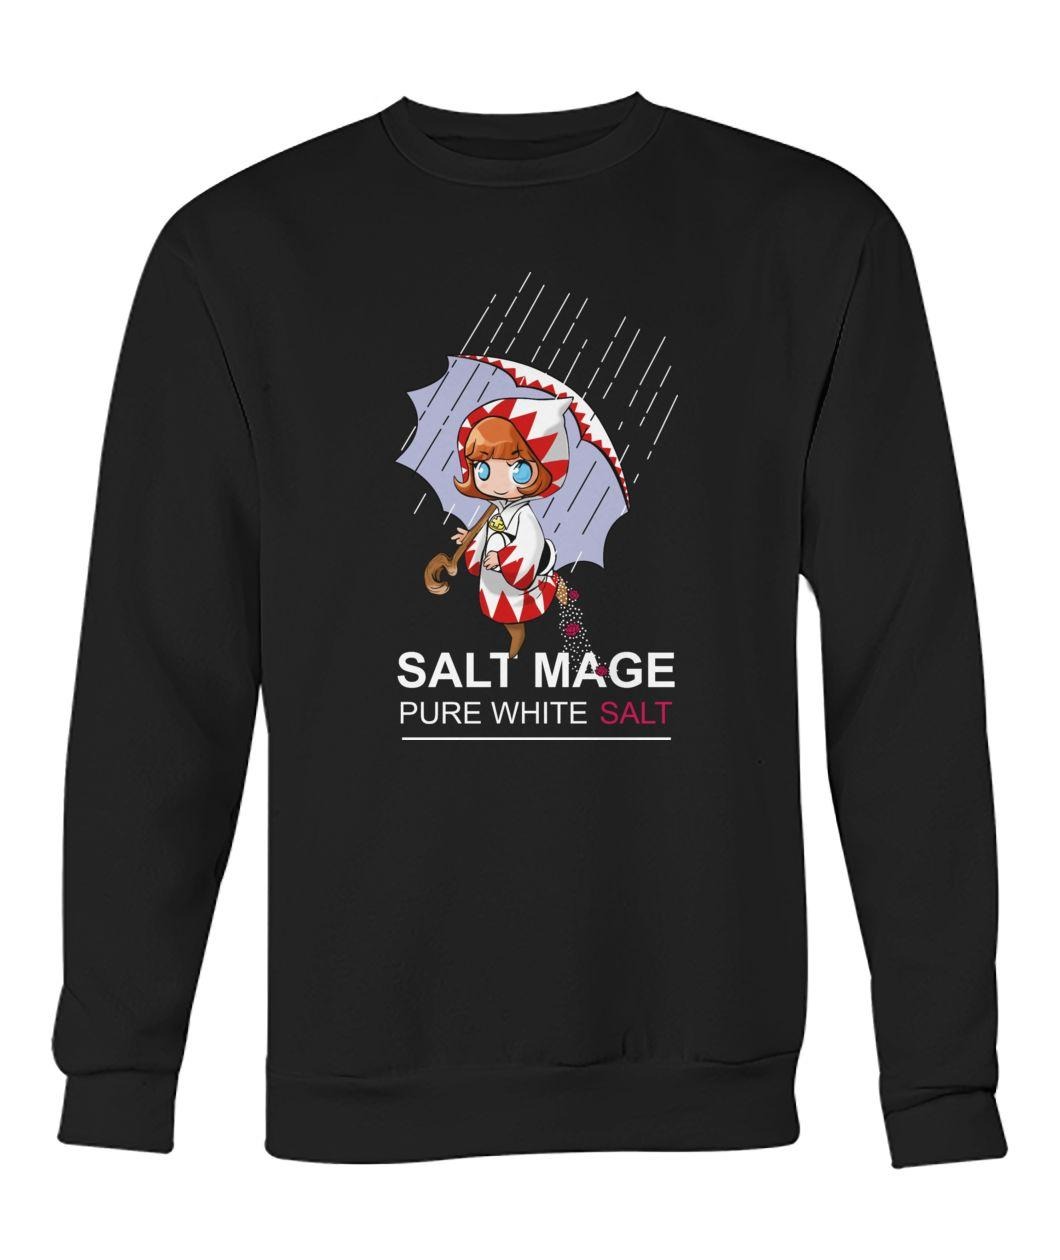 Salt mage pure white salt sweatshirt